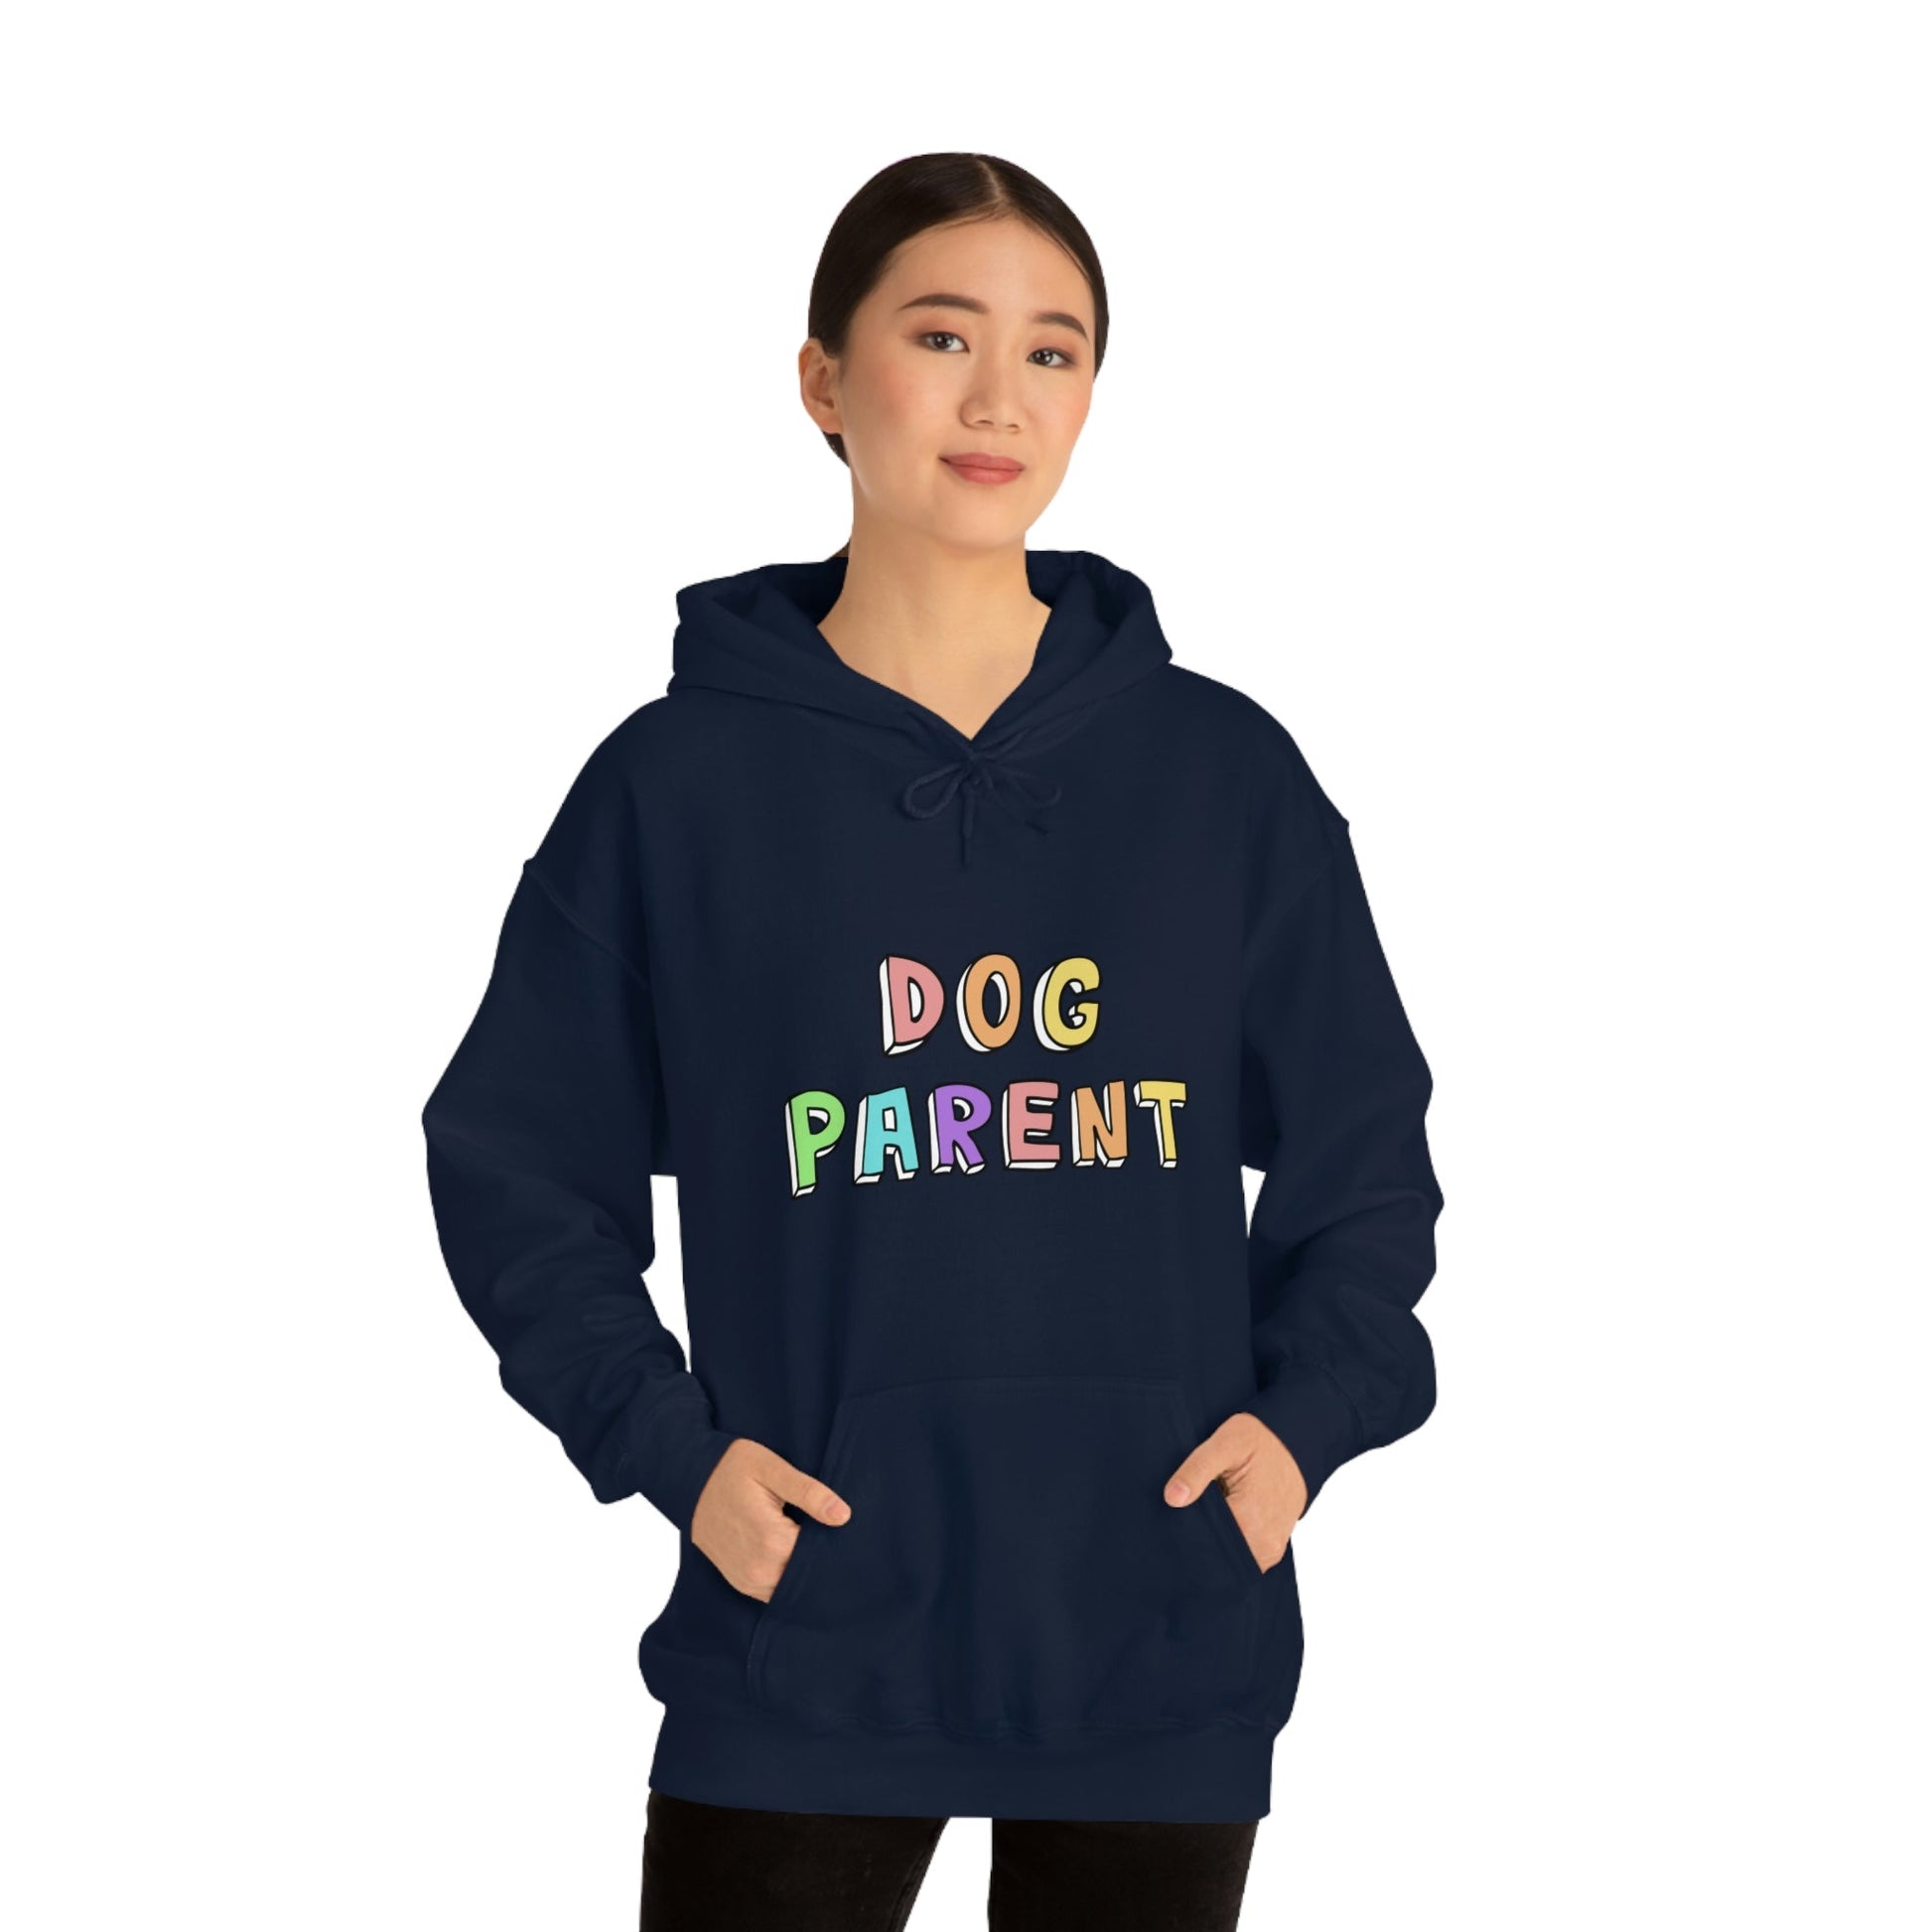 Dog Parent | Hooded Sweatshirt - Detezi Designs-23416535212064833650